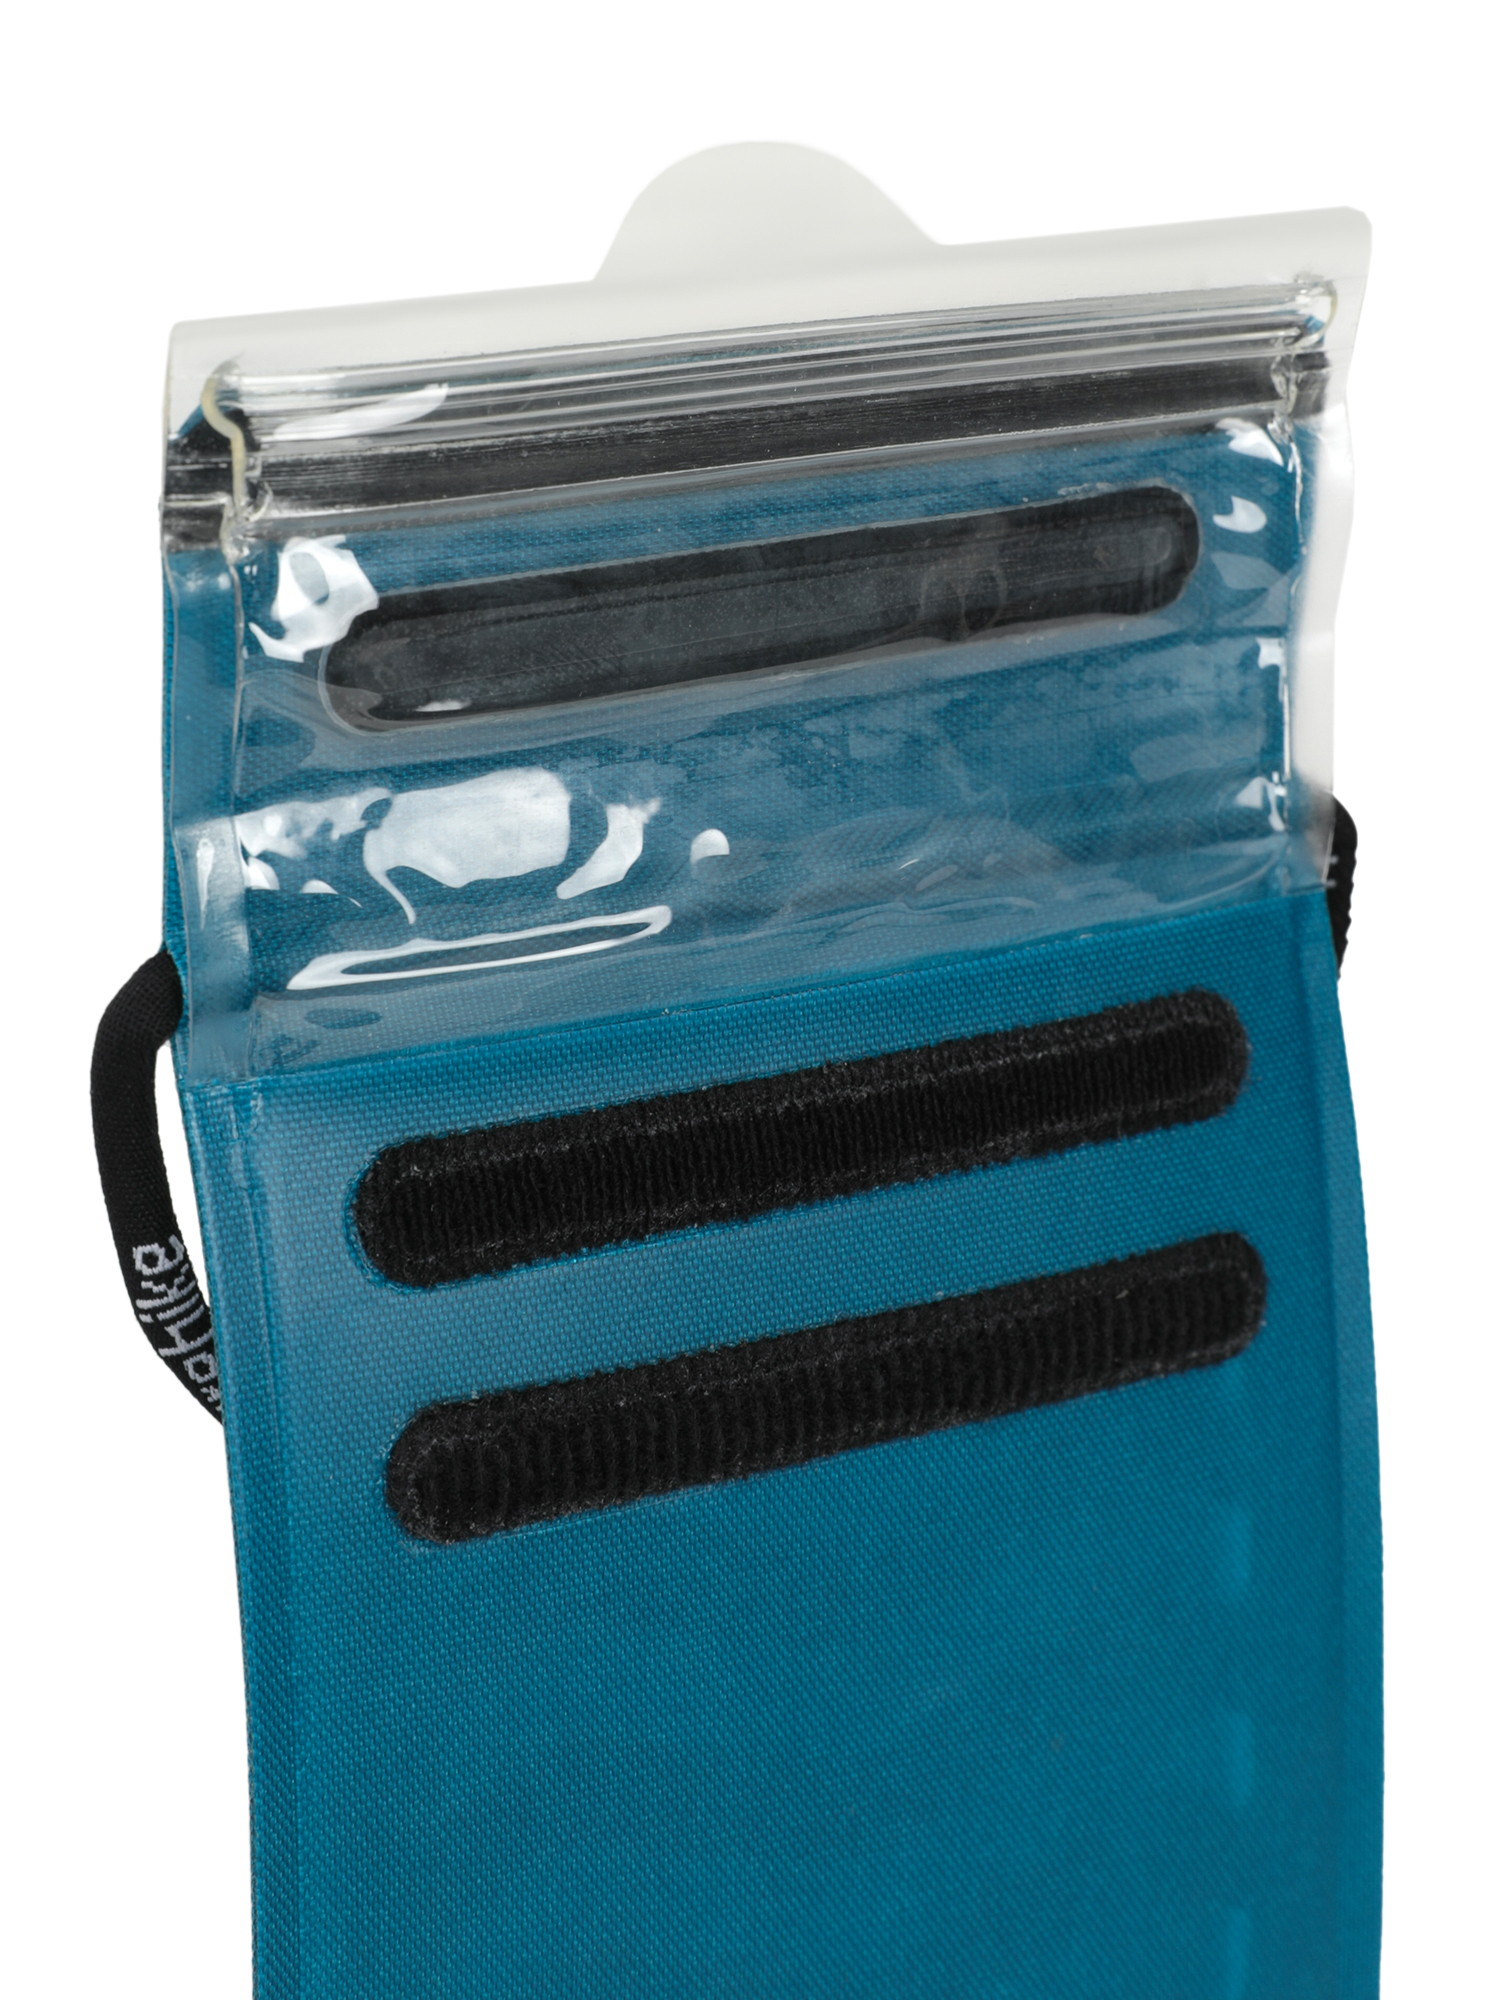 Чехол водонепроницаемый для телефона Naturehike Mobile phone waterproof bag Blue